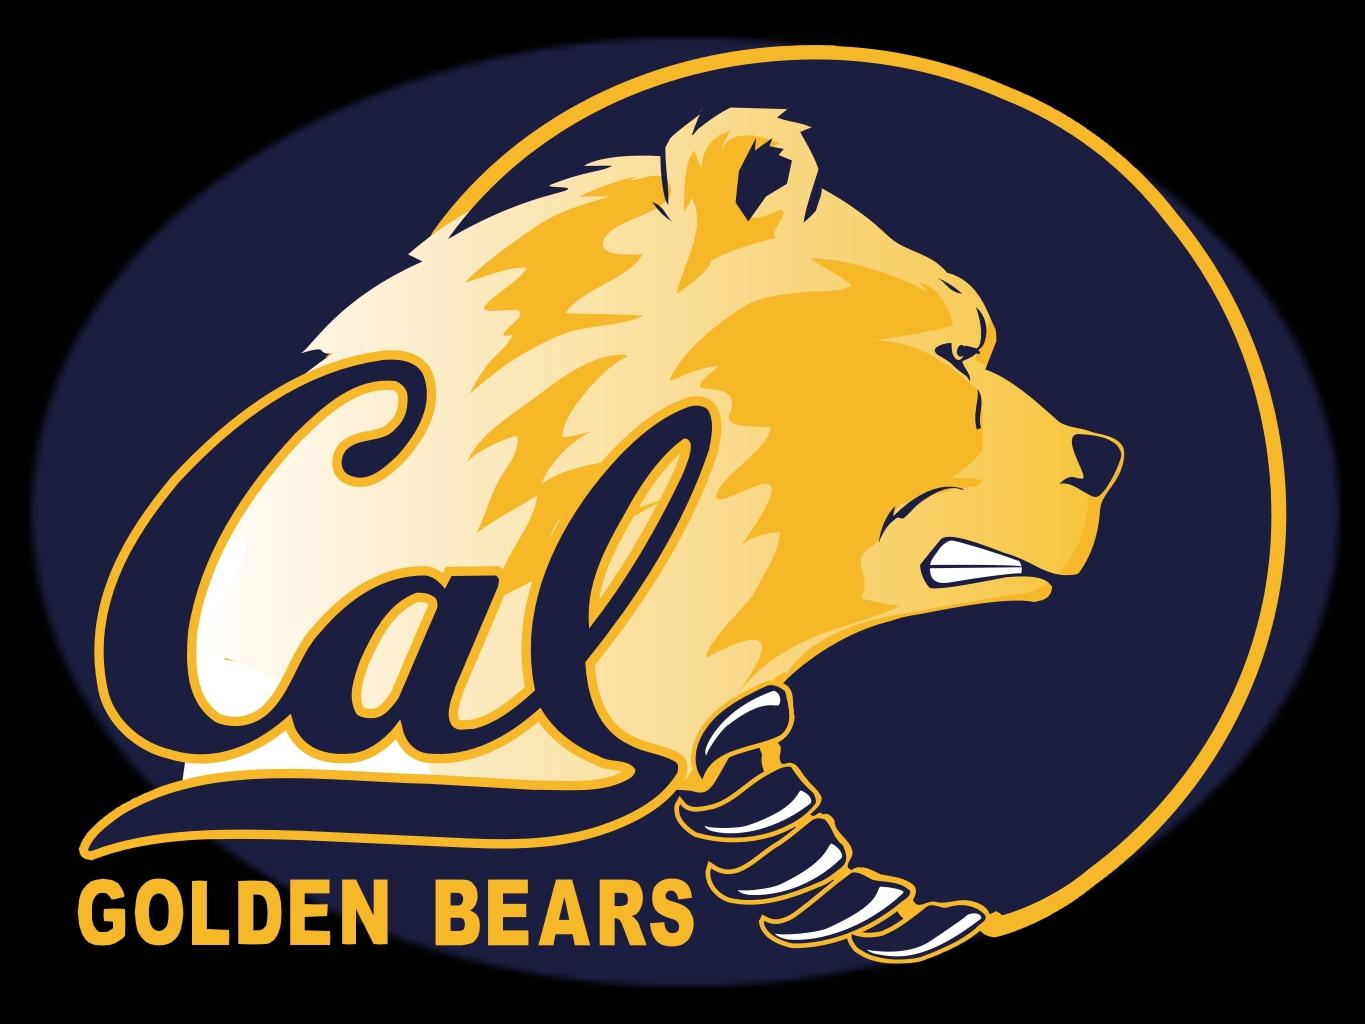 Gold Bear Logo - California Golden Bears Logo Black And Gold. Berkeley Ph.D. Program